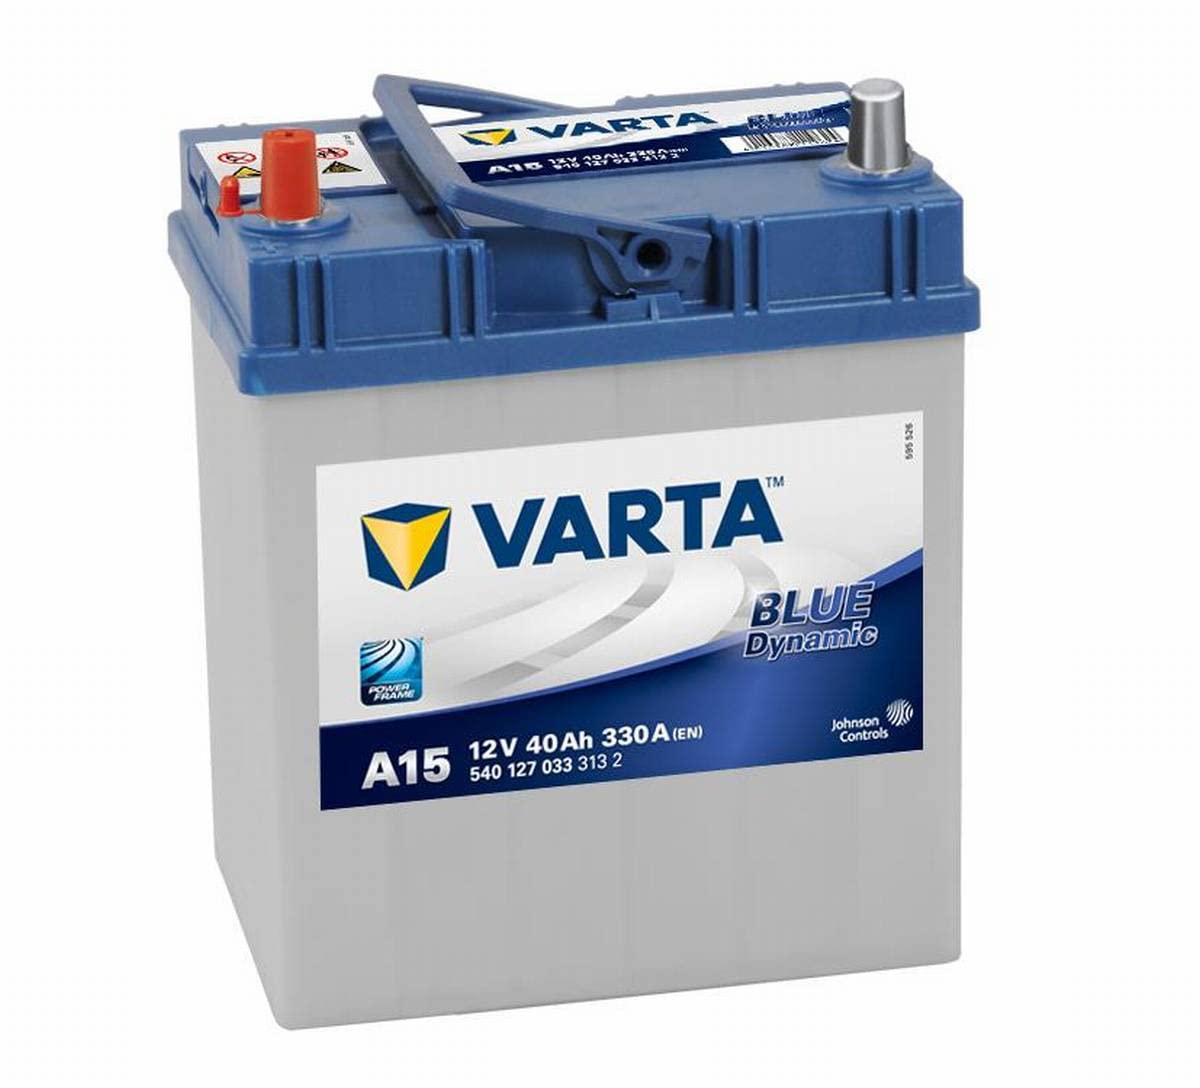 Varta A15 Blue Dynamic Autobatterie, 540 127 033, 12V 40Ah 330A von Varta